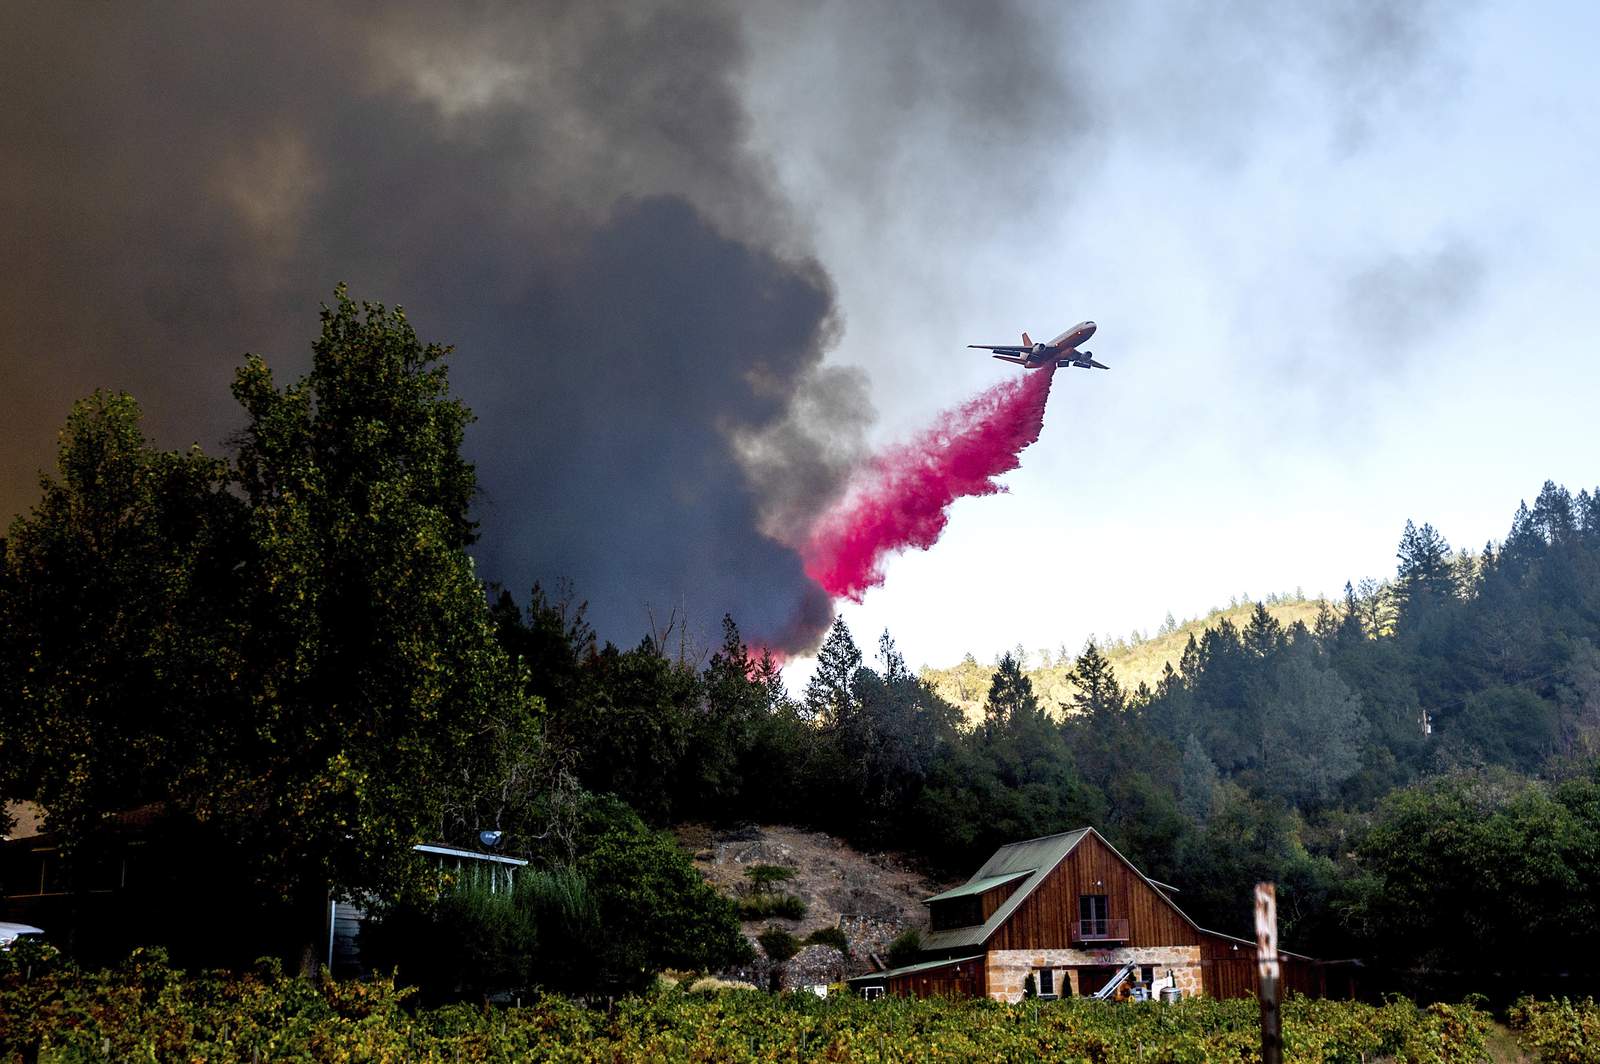 4th person killed in devastating California wildfire